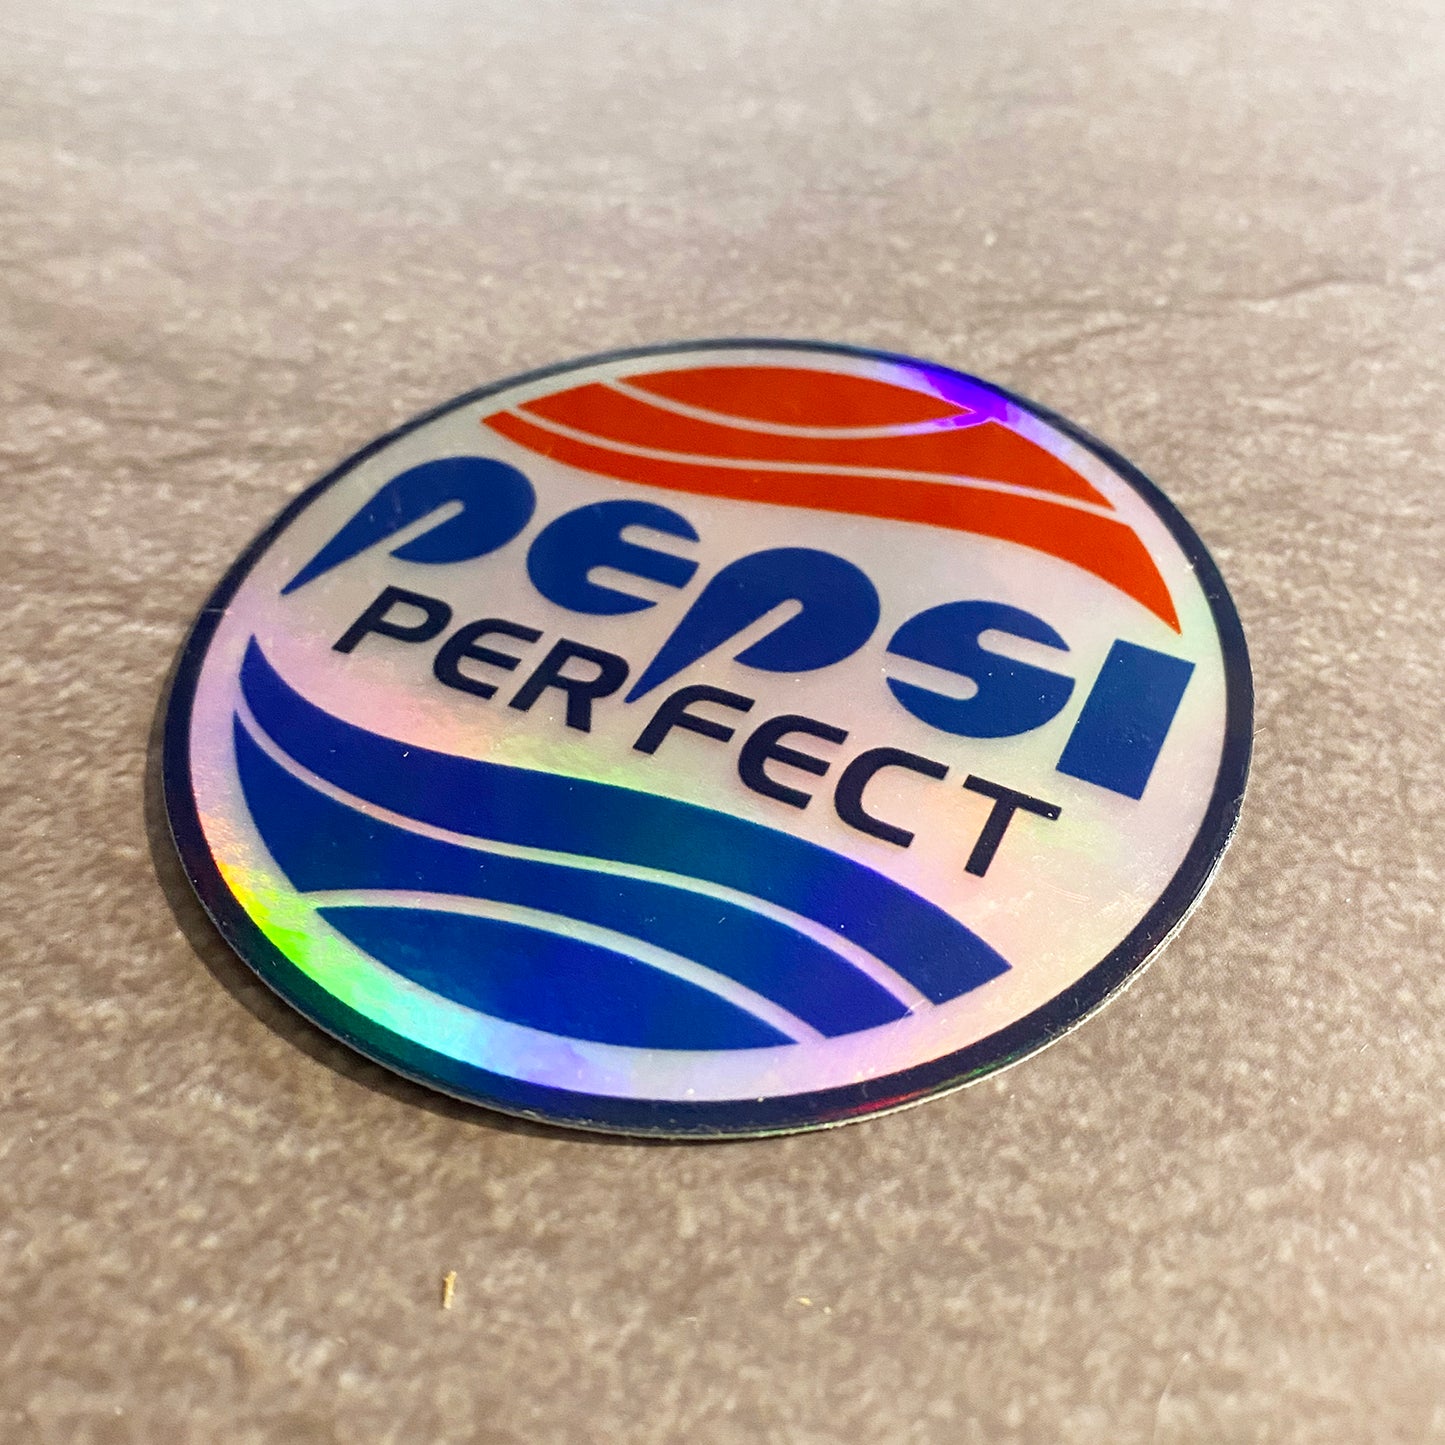 Future Perfect Cola holographic vinyl sticker